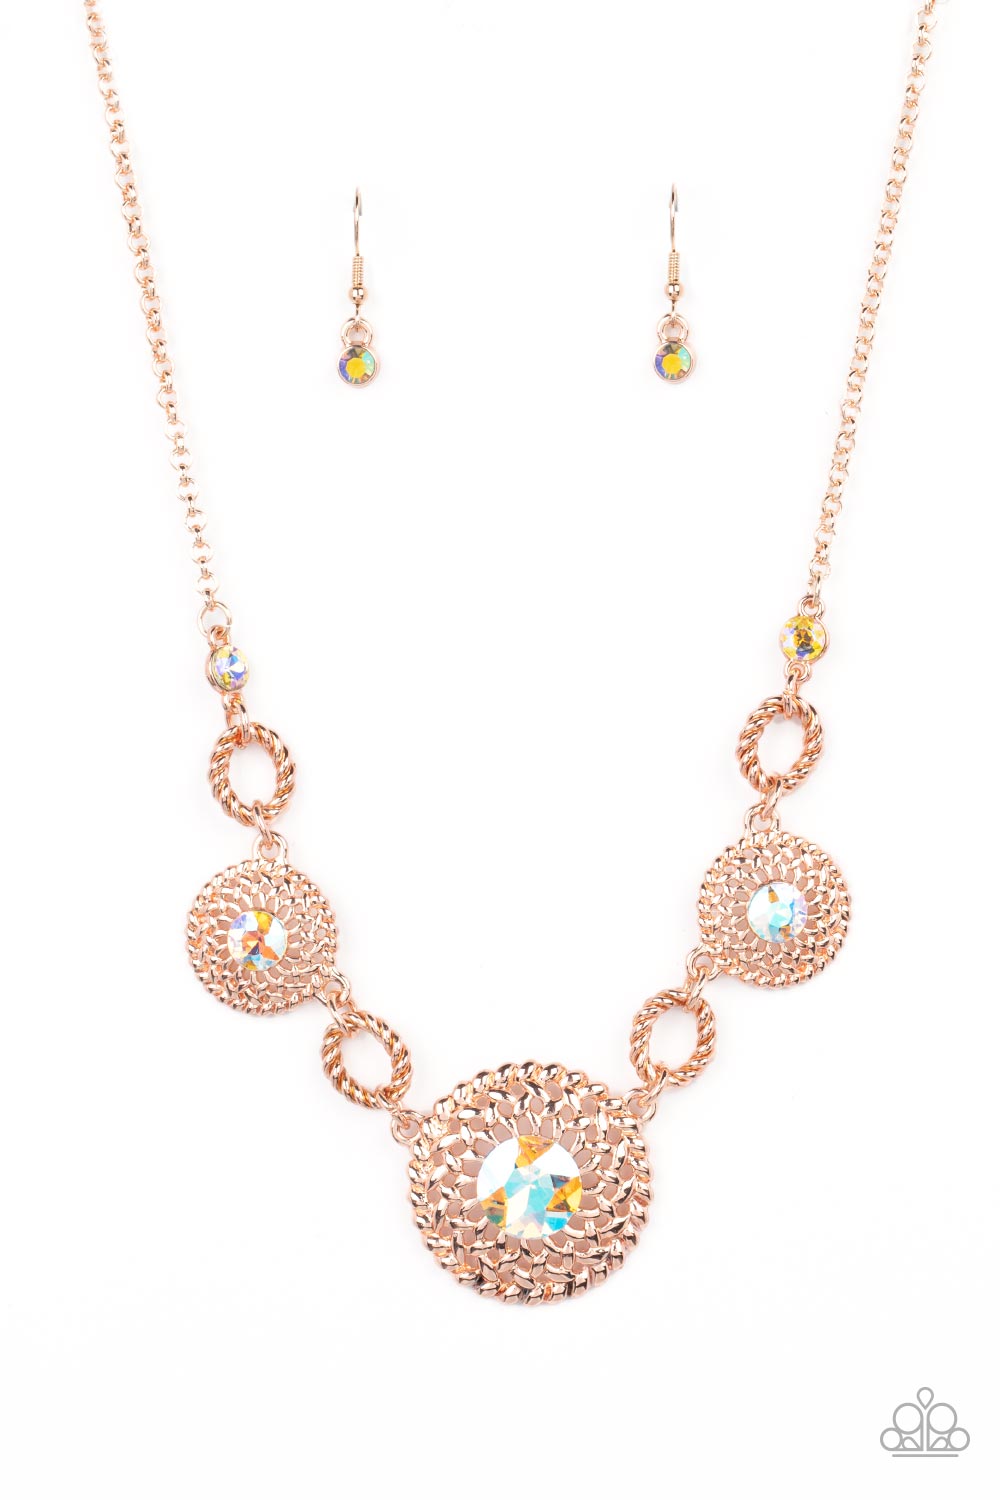 Cosmic Cosmos - Multi Iridescent Rhinestone/Rose Gold Flower Paparazzi Necklace & matching earrings